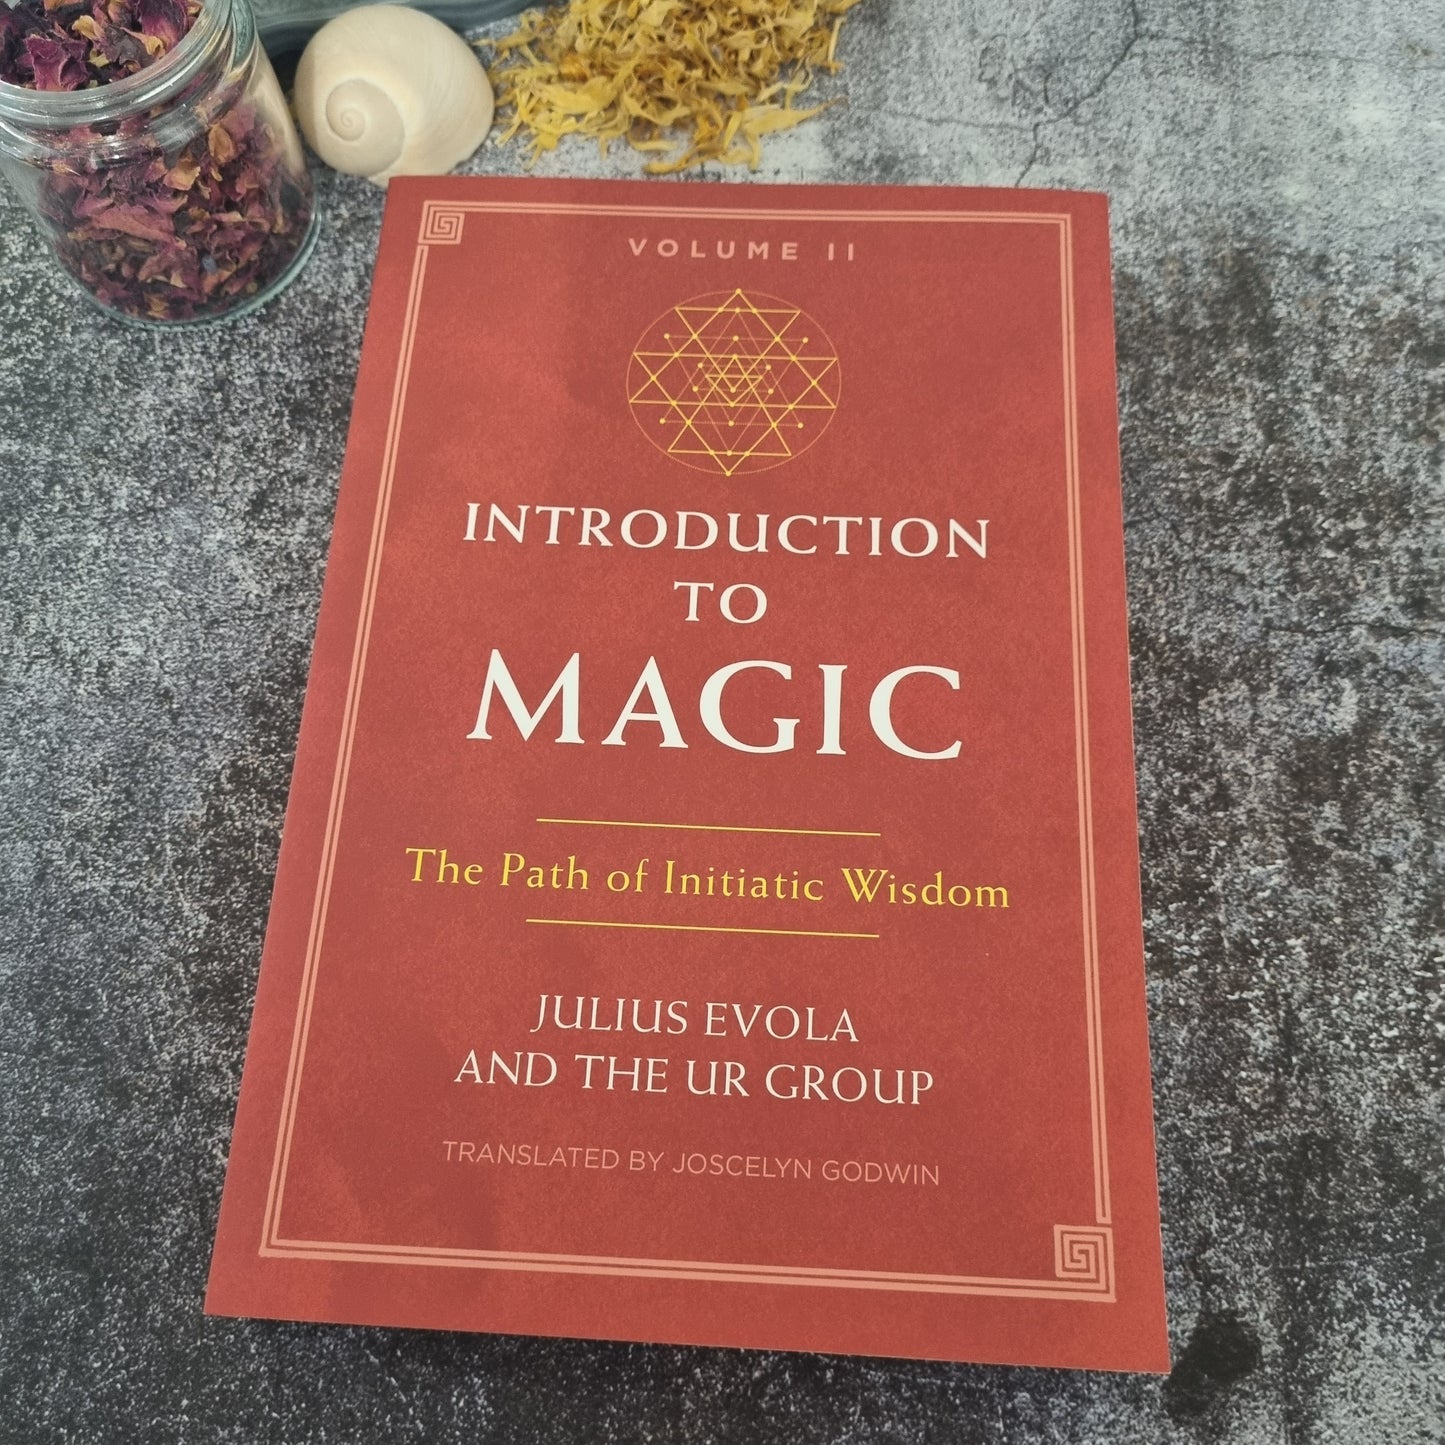 Introduction to Magic Volume II